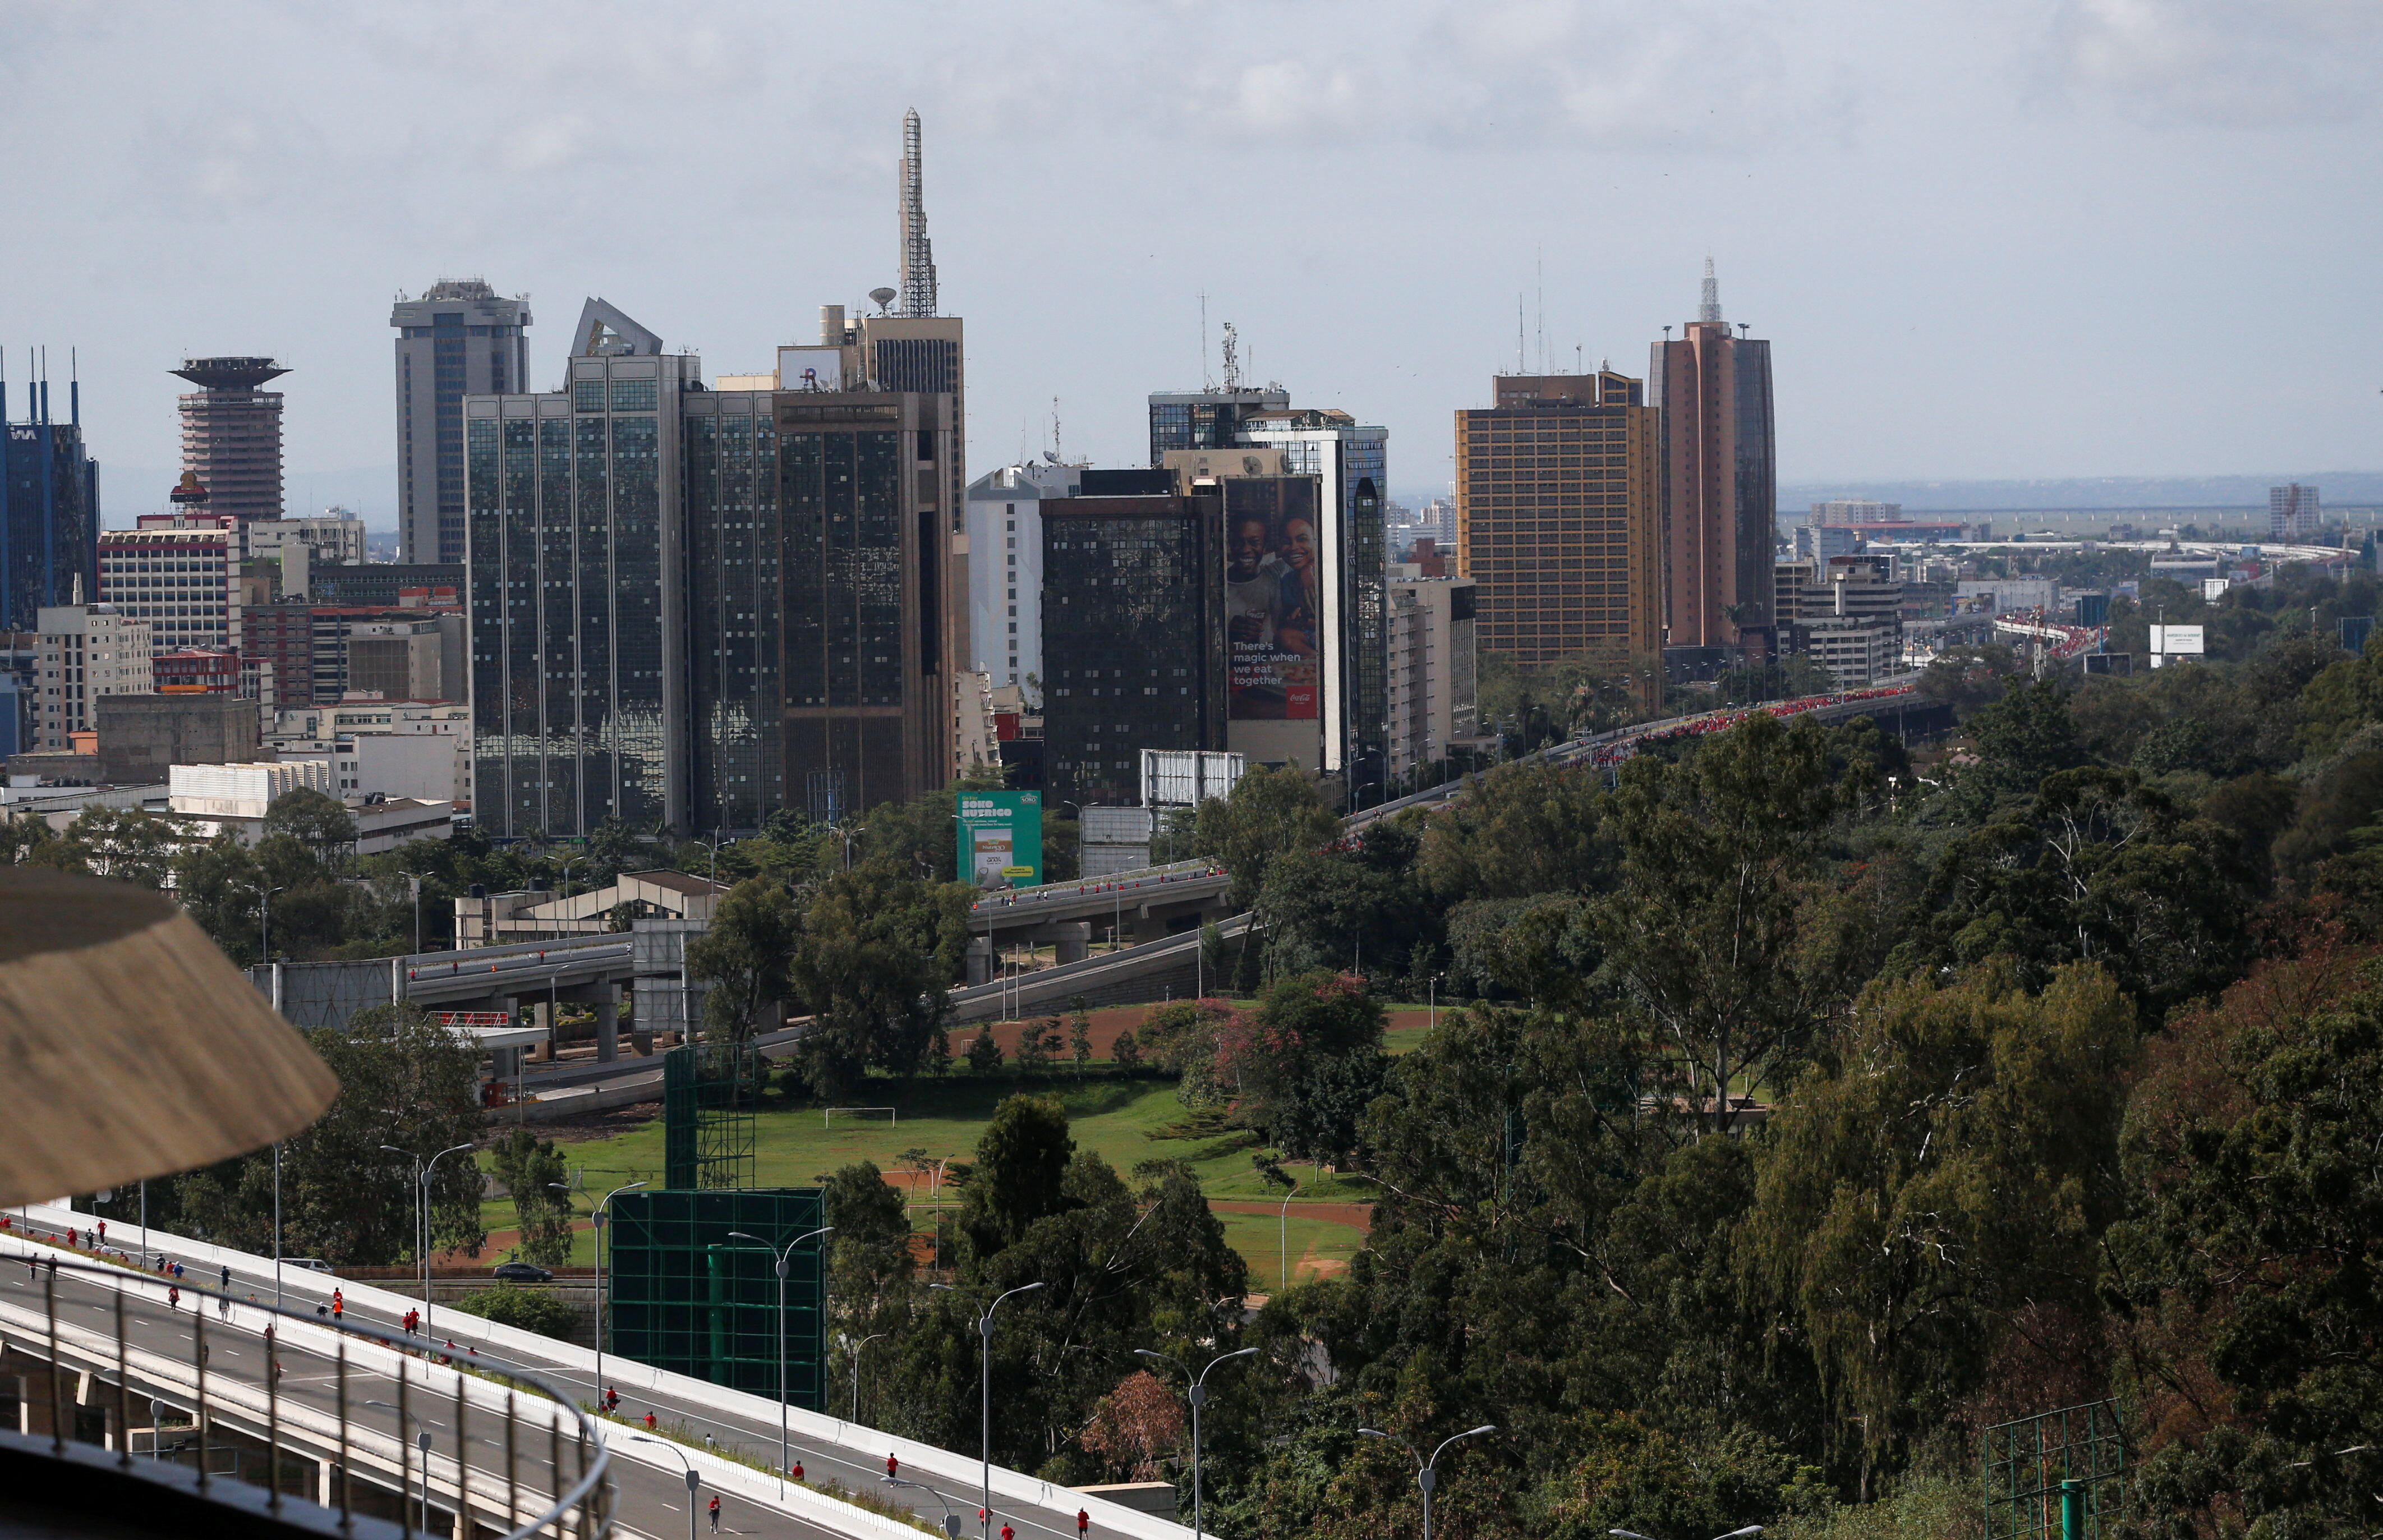 A view shows the Nairobi cityscape on the Nairobi Expressway undertaken by the China Road and Bridge Corporation along Waiyaki Way within Westlands district of Nairobi